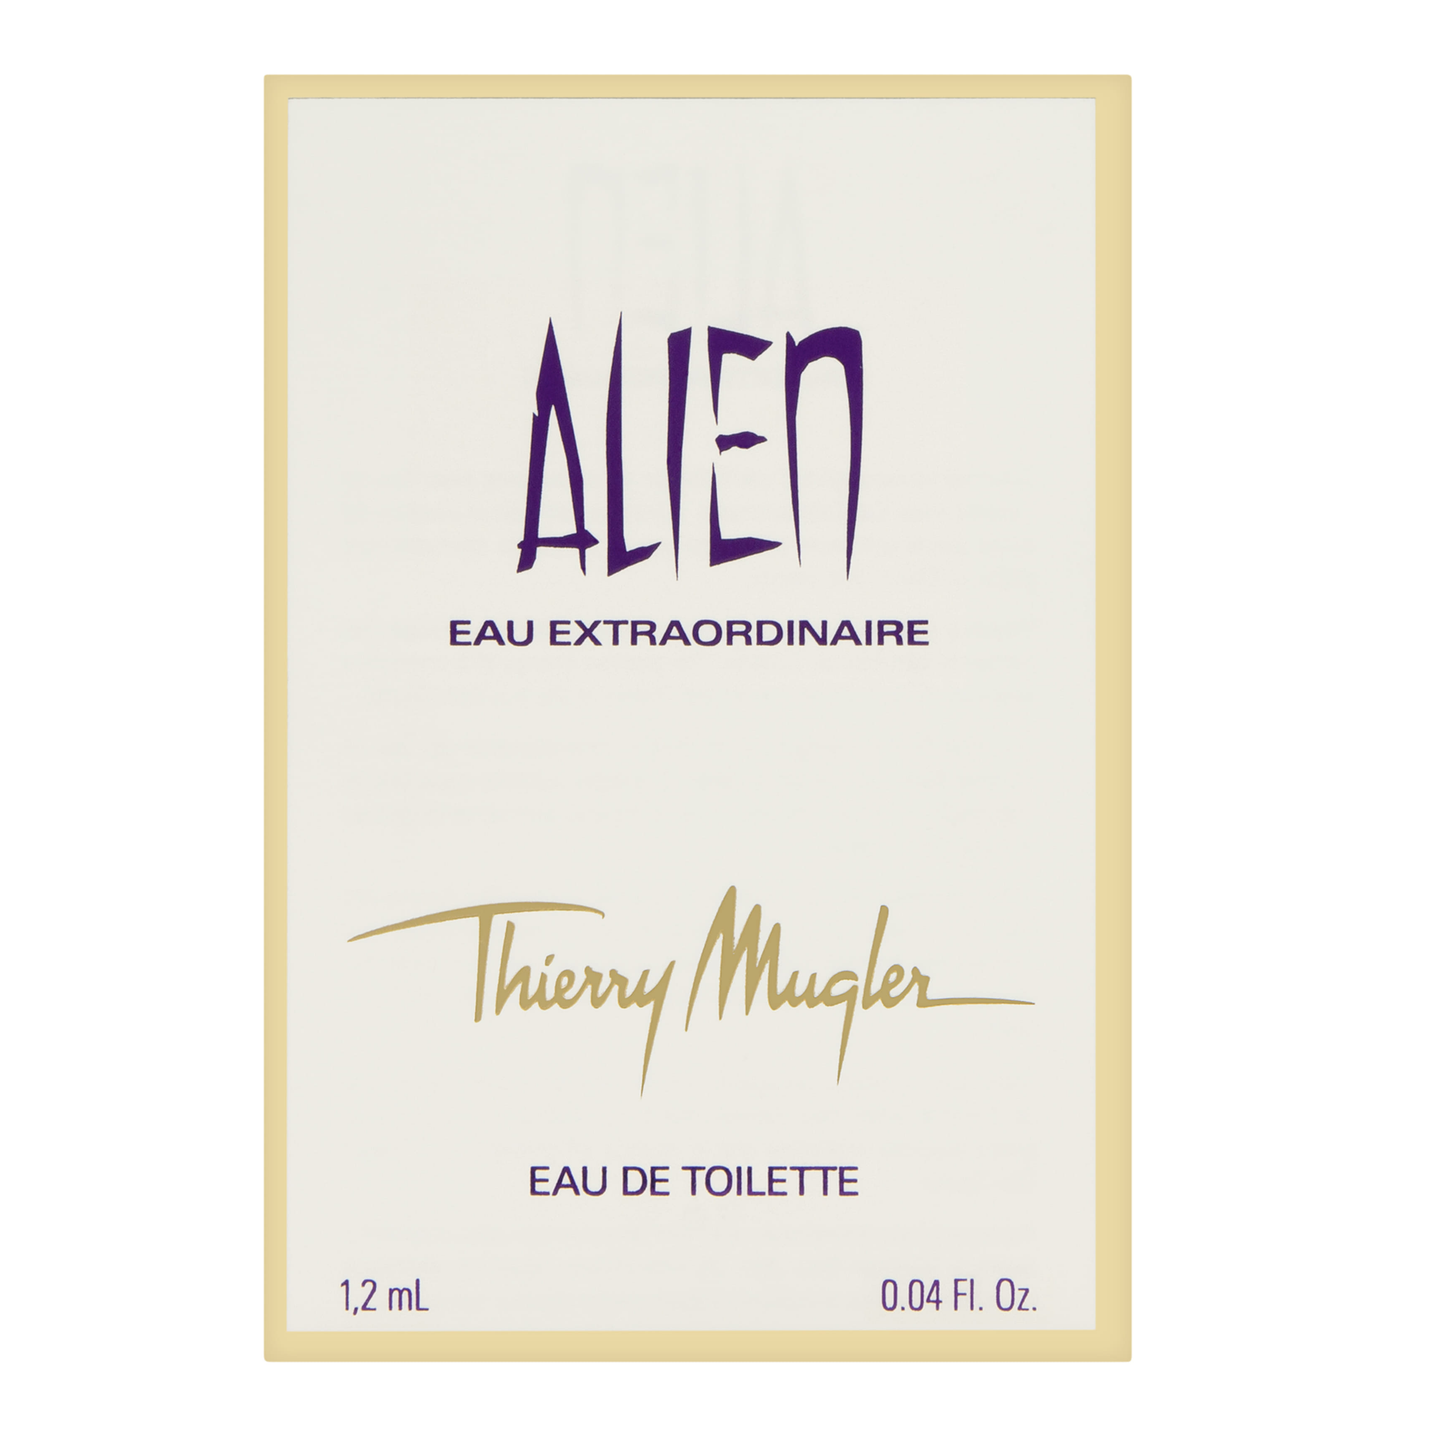 THIERRY MUGLER Alien Eau Extraordinaire EDT 1.2ml Vial Travel Fragrance for women